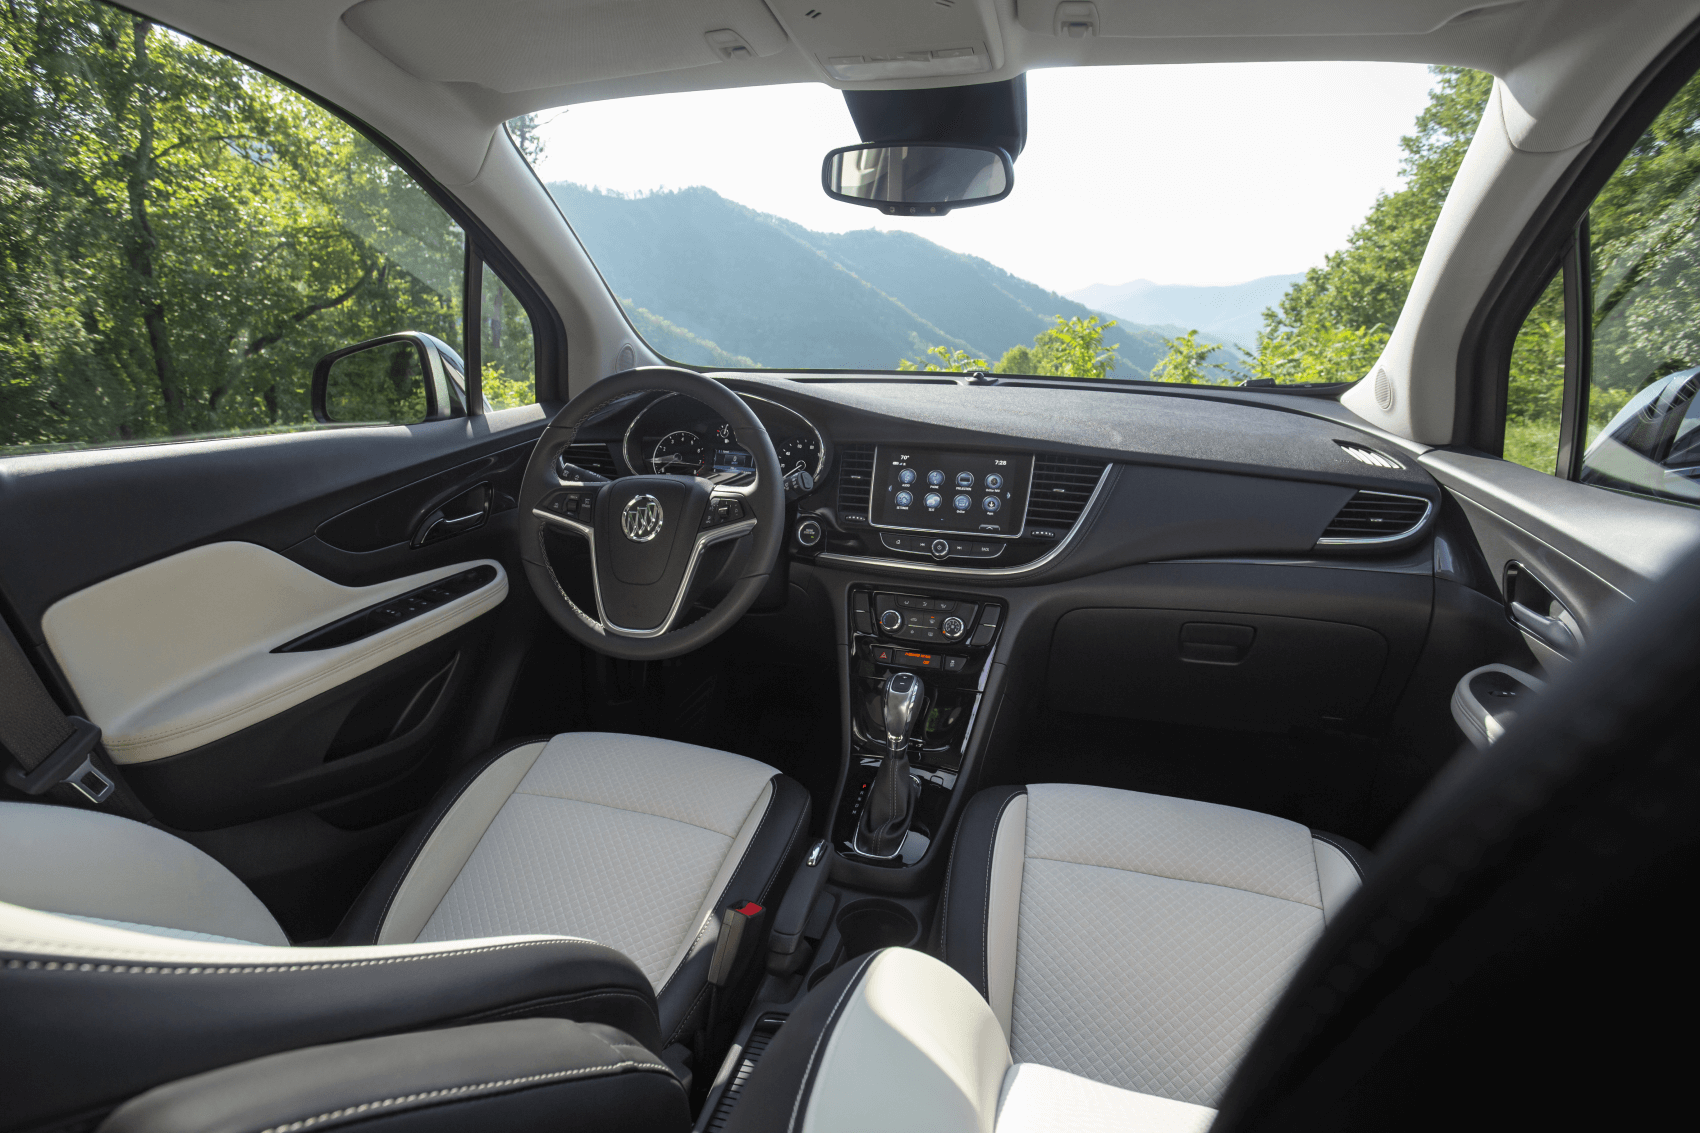 2021 Buick Encore Interior Dashboard Andy Mohr Buick GMC 